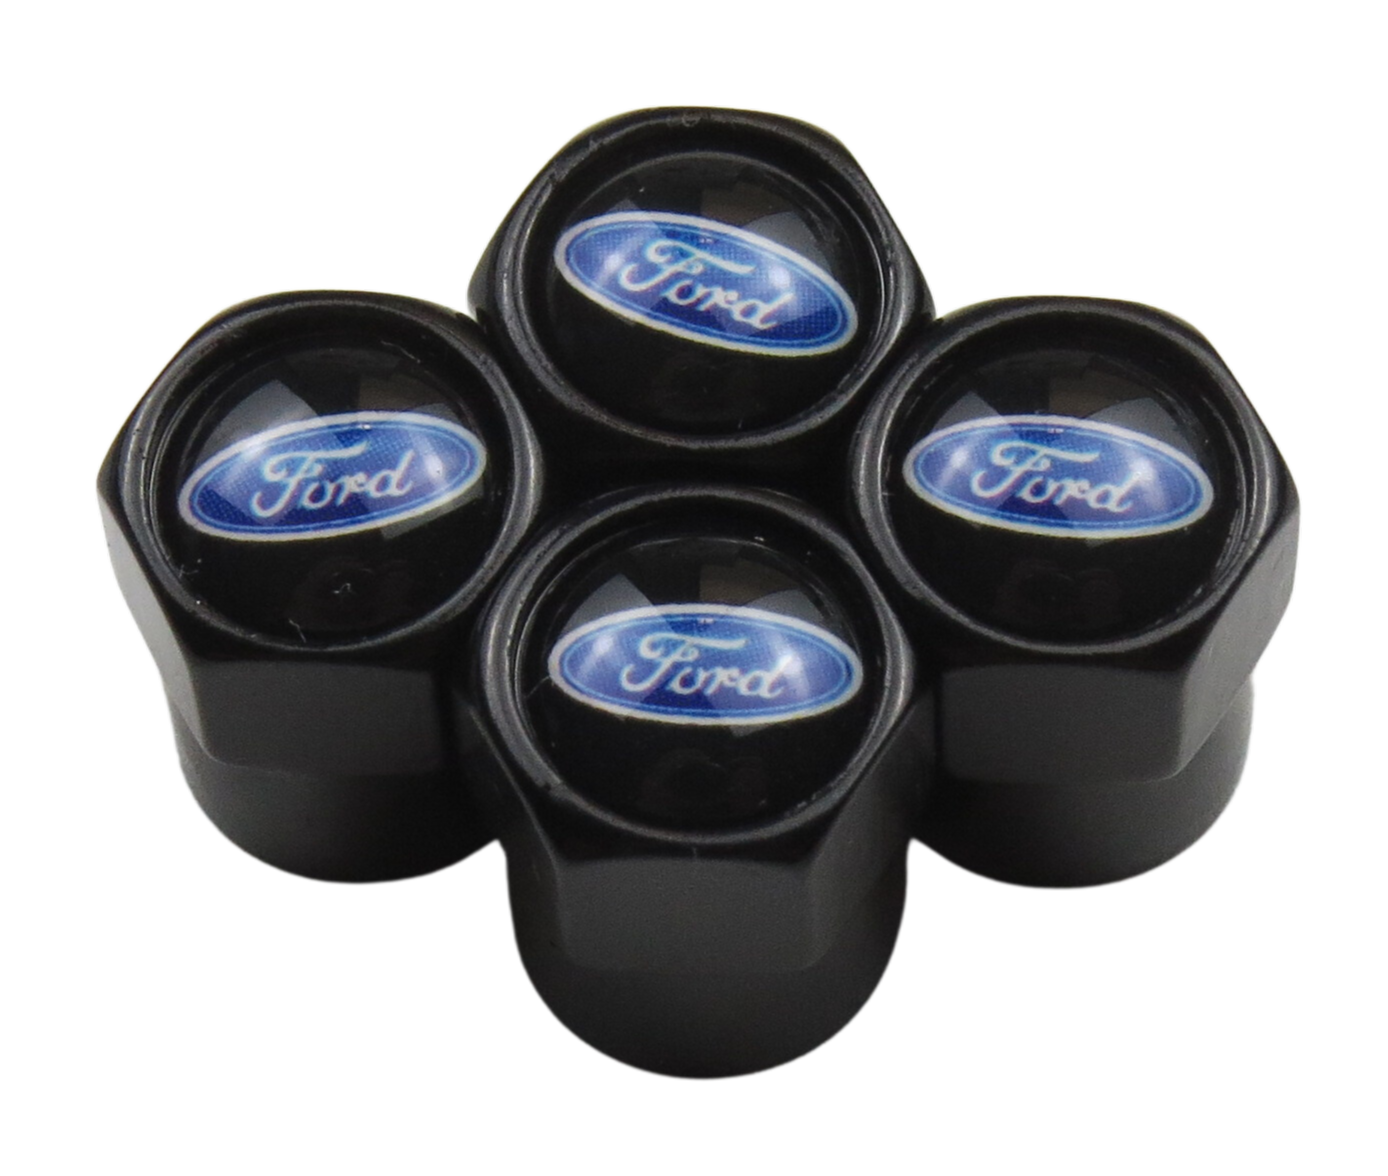 Ford Valve Caps - Black